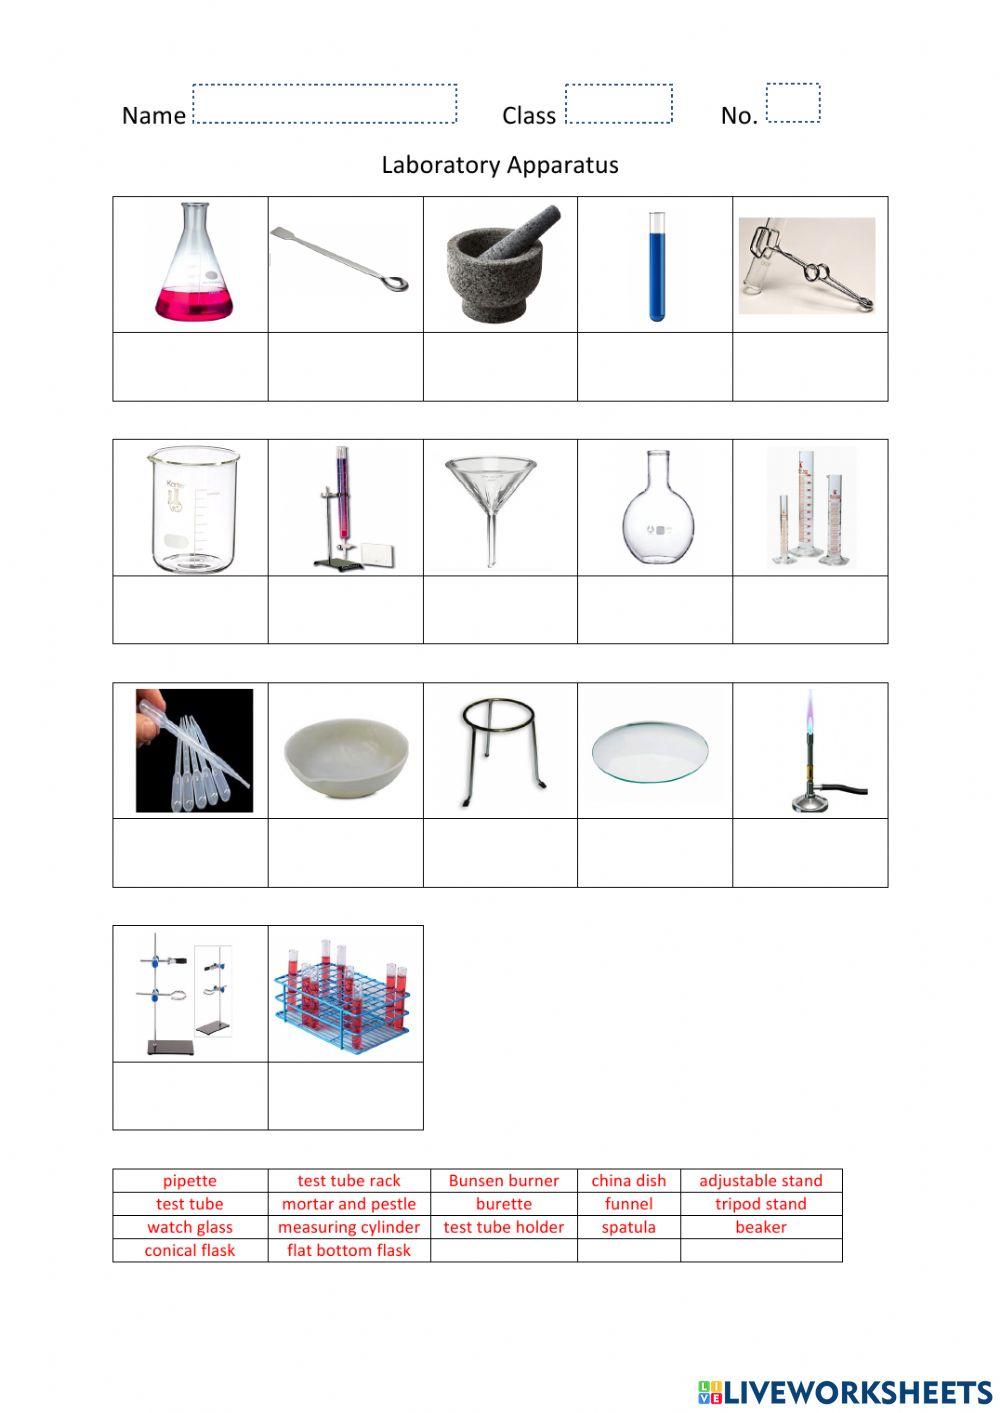 Laboratory Apparatus interactive worksheet | Live Worksheets